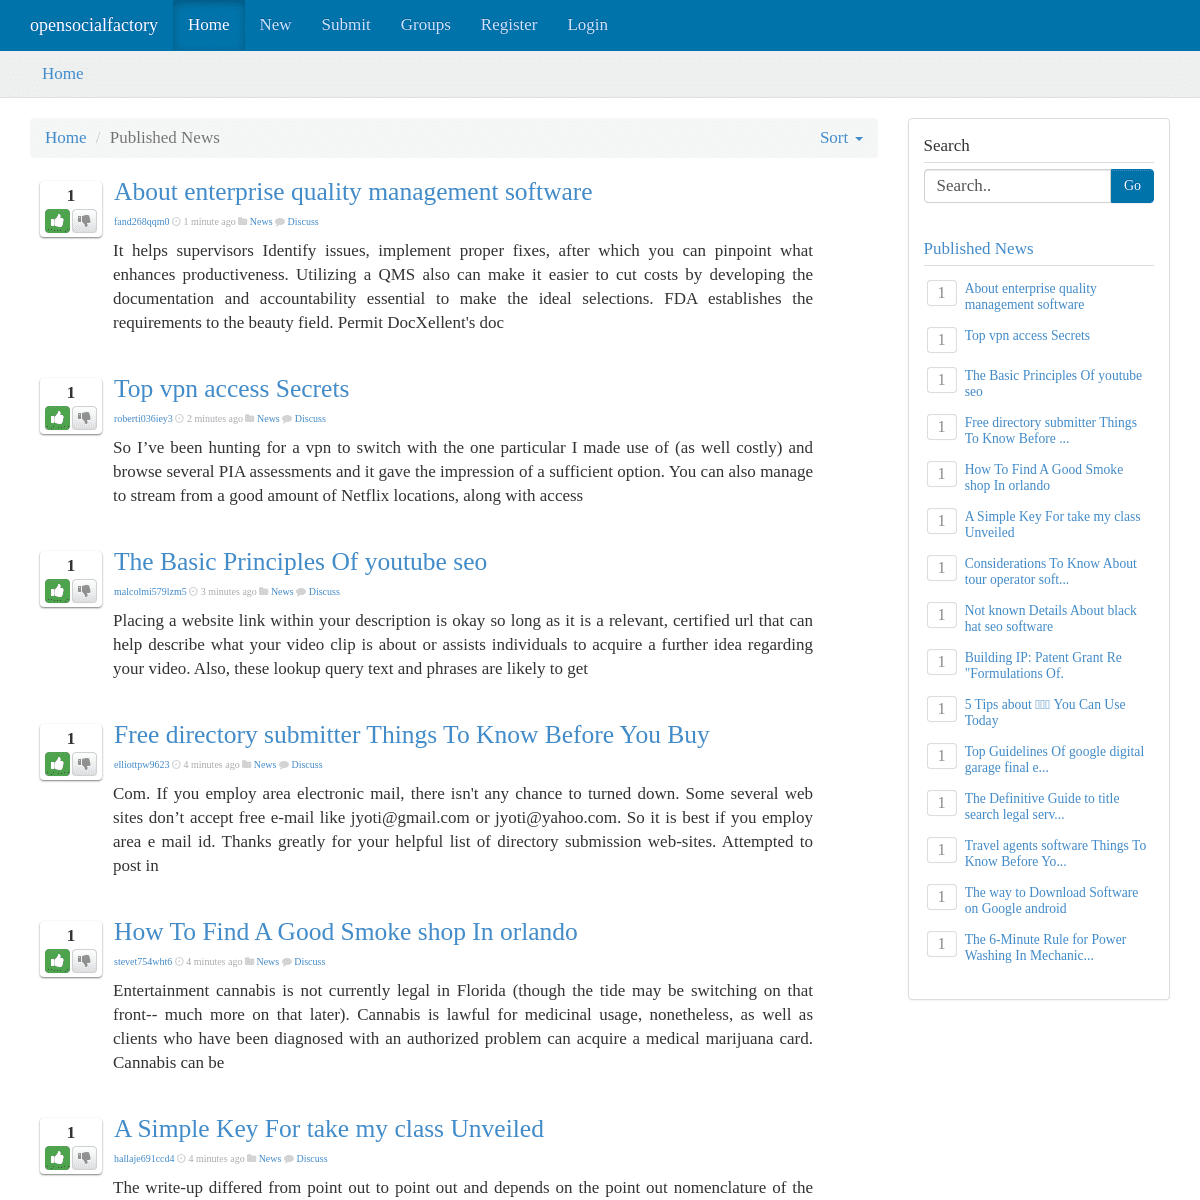 A complete backup of https://opensocialfactory.com